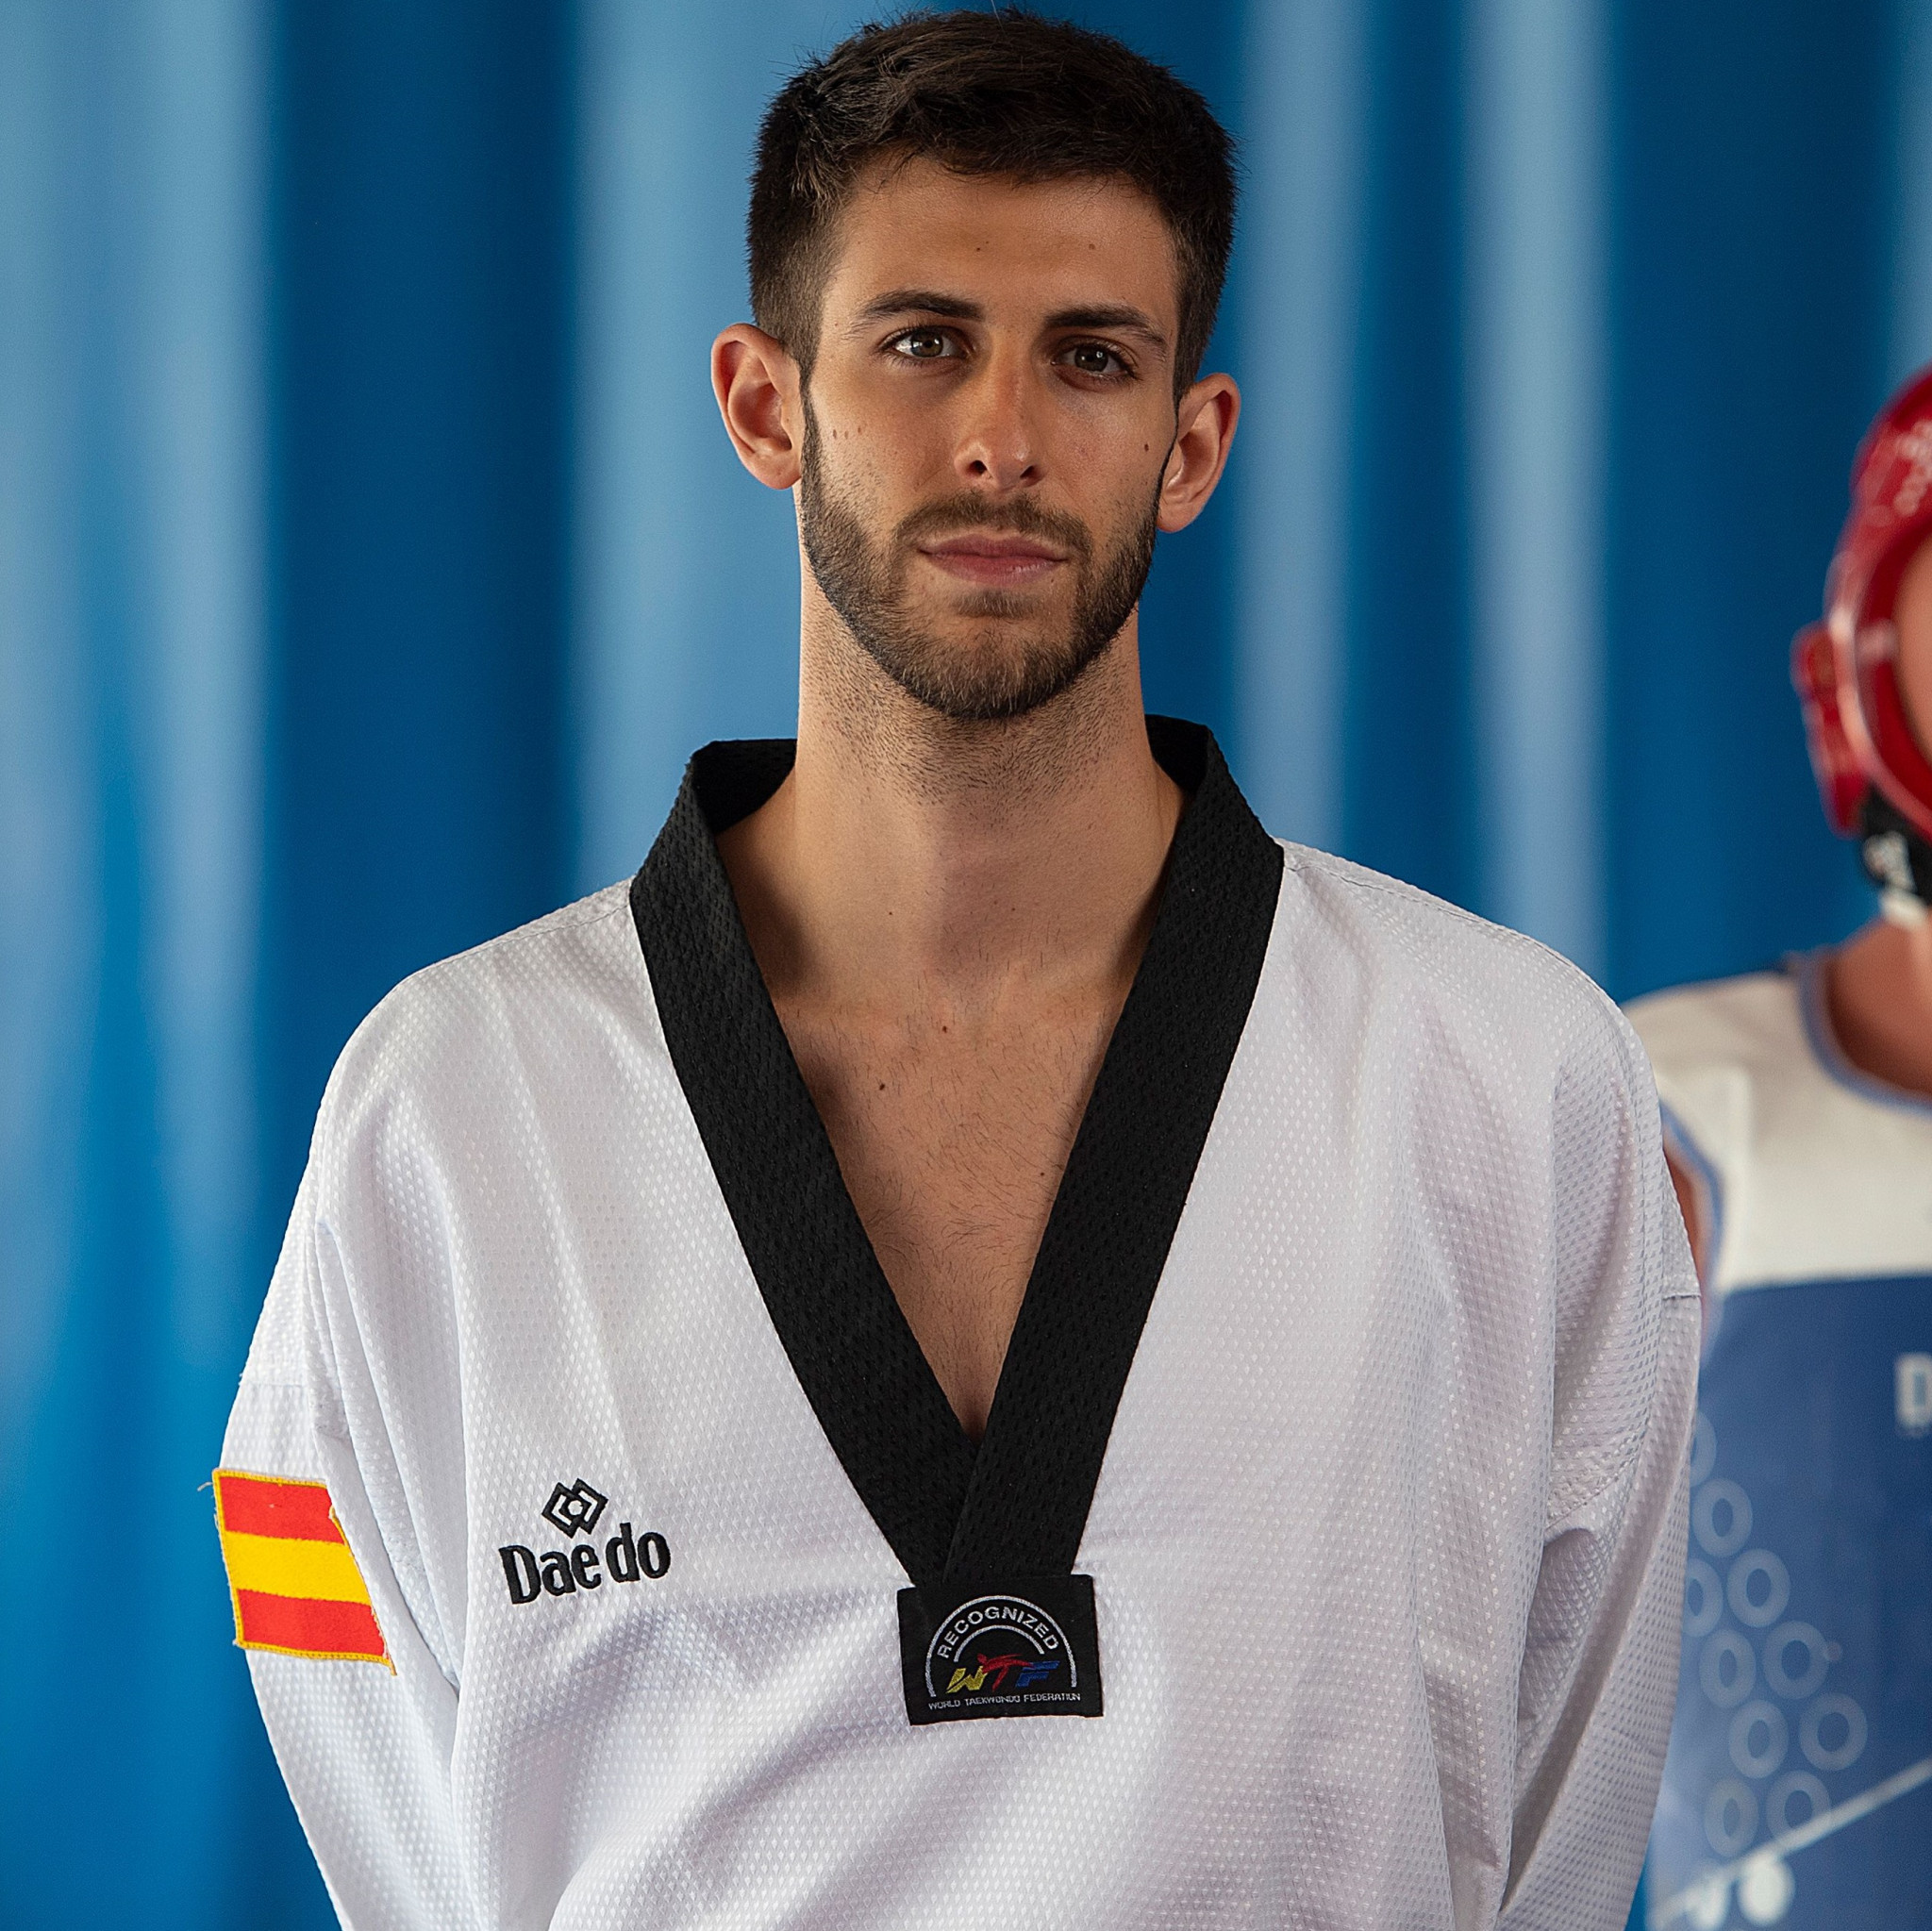 Daniel Quesada: Spaniard who topped the world